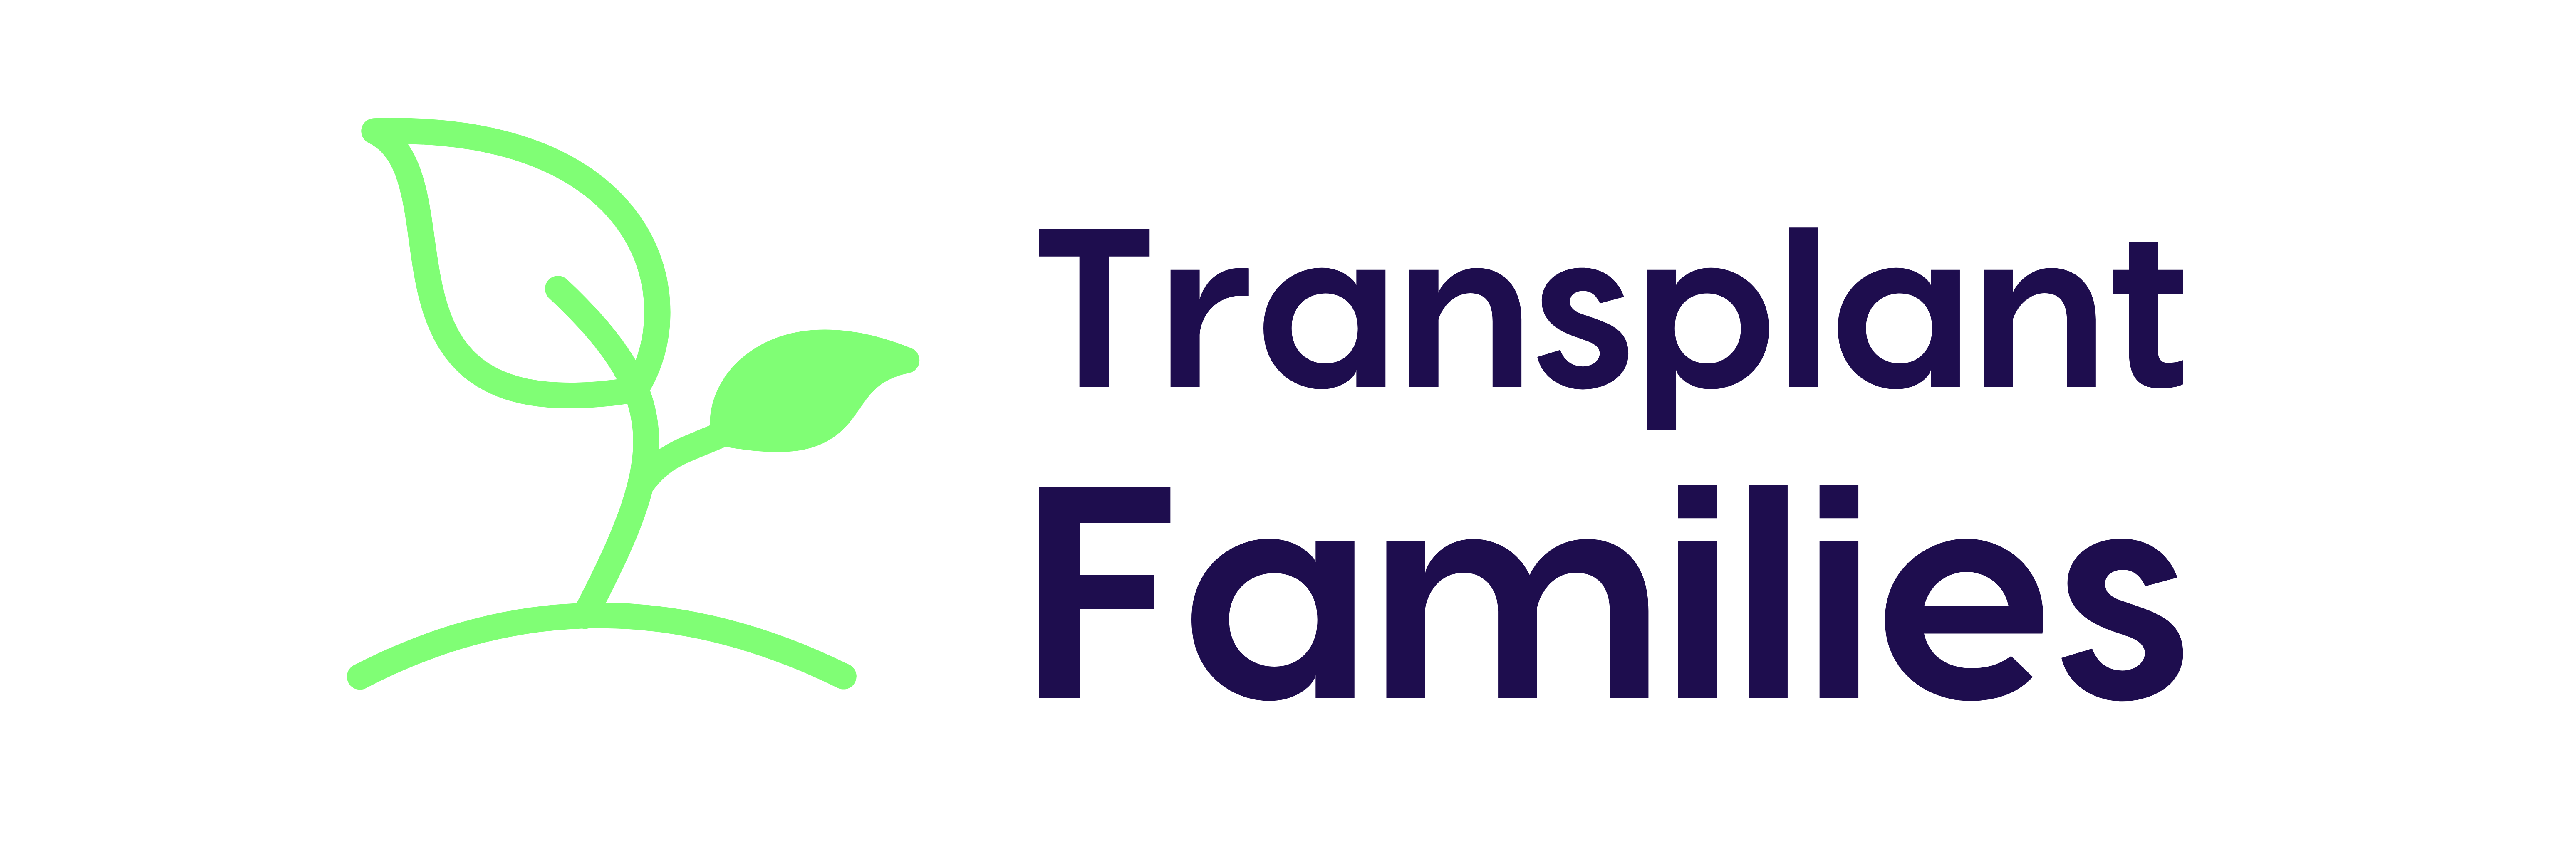 Transplant Logo - Transplant Families